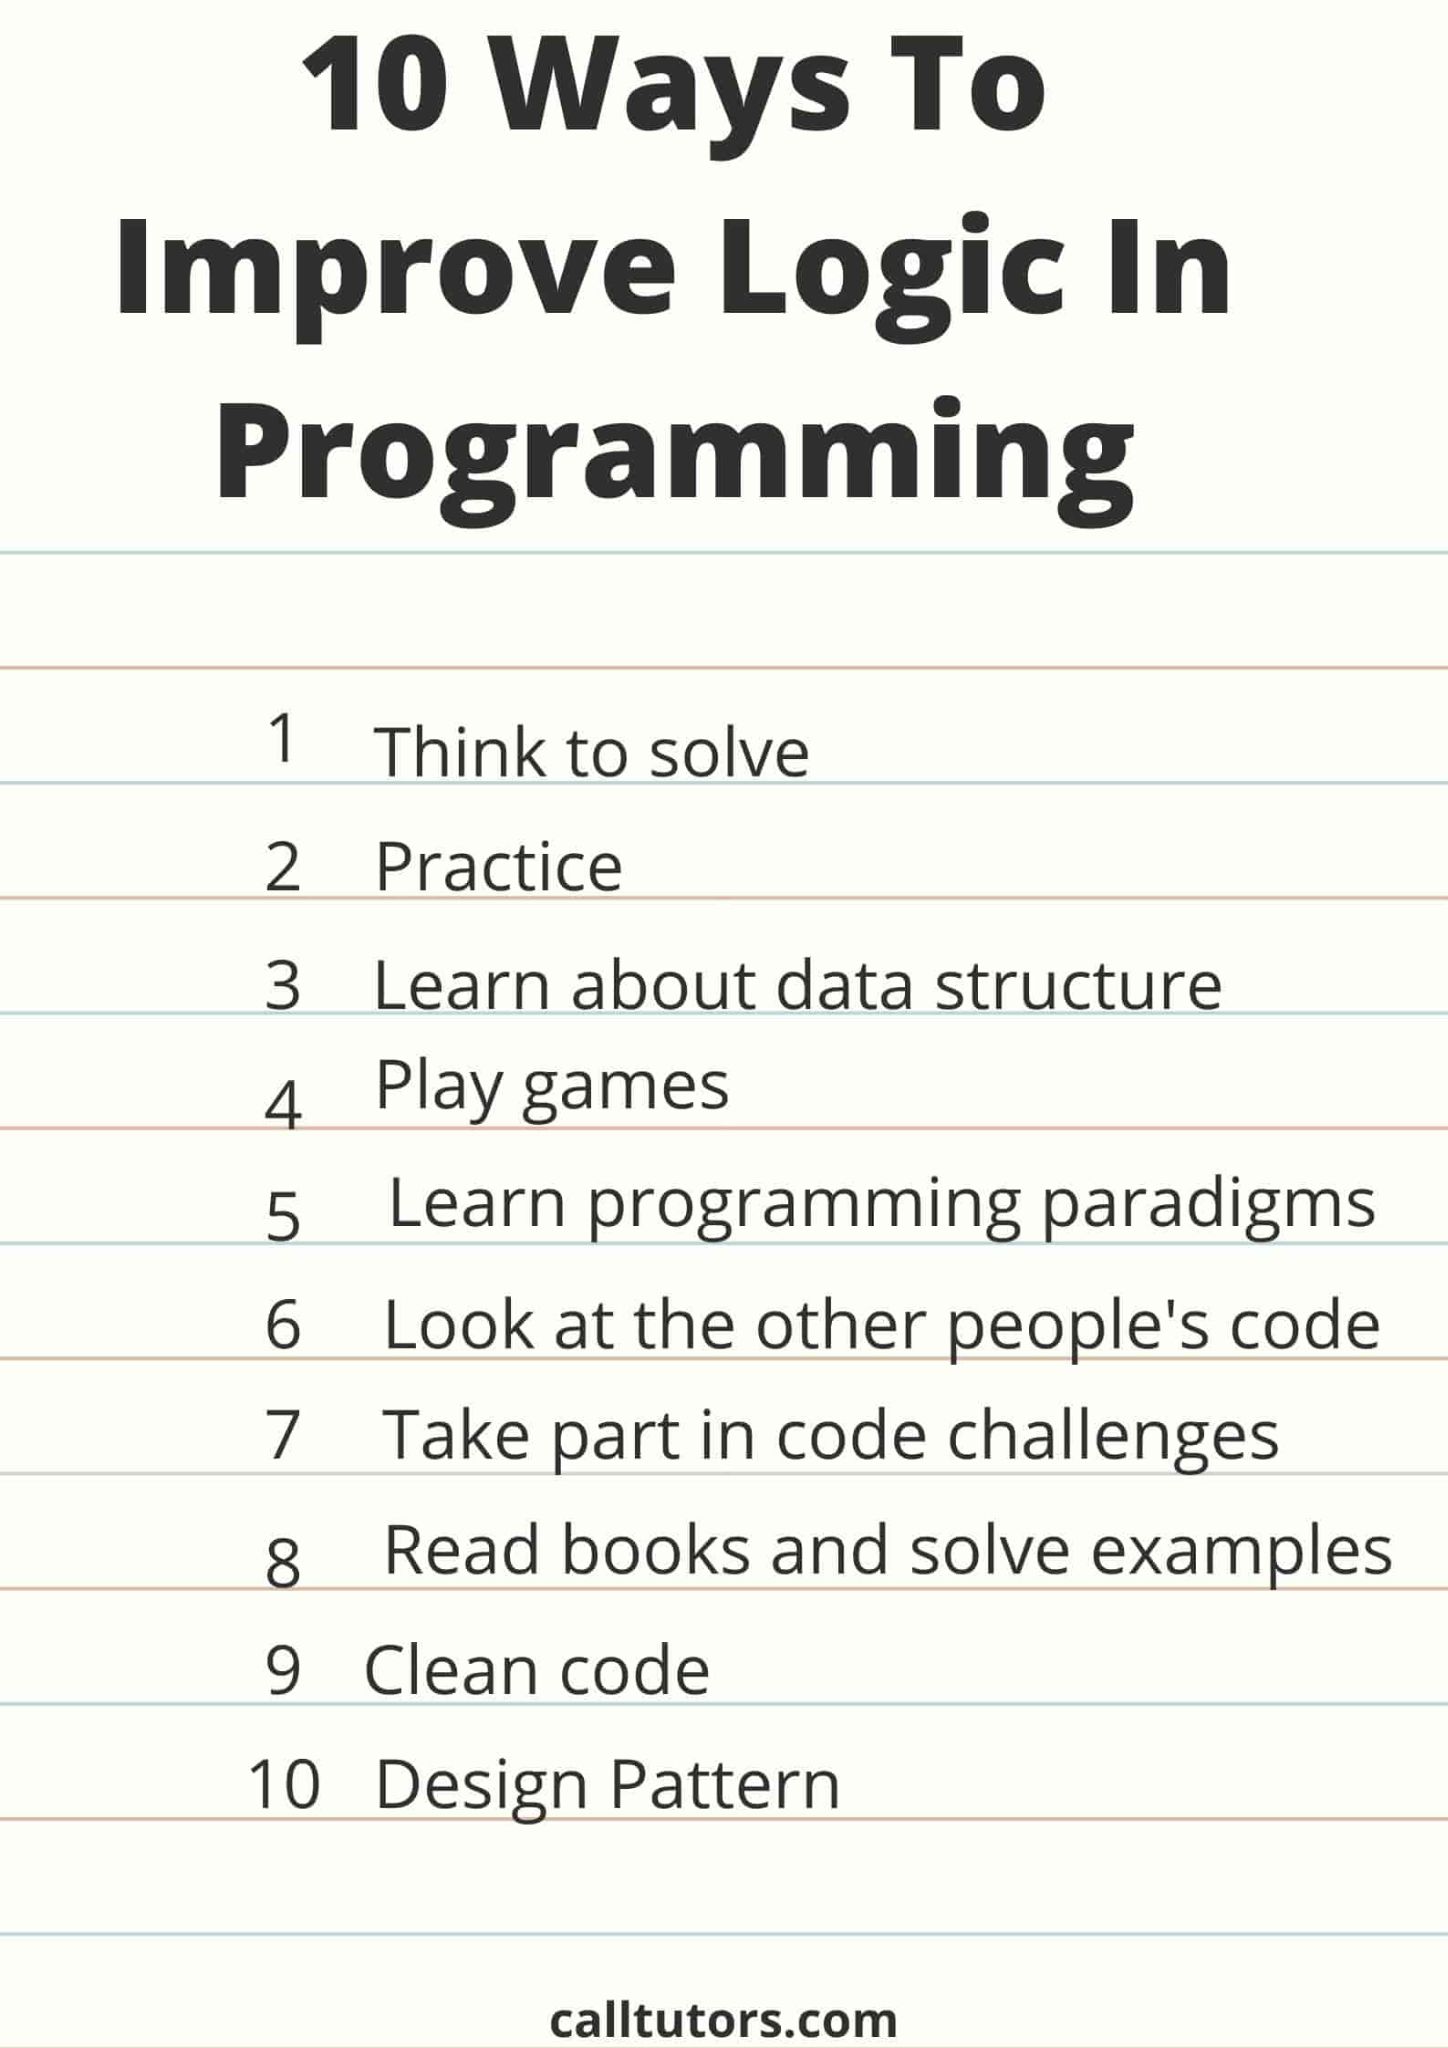 Logic in programming